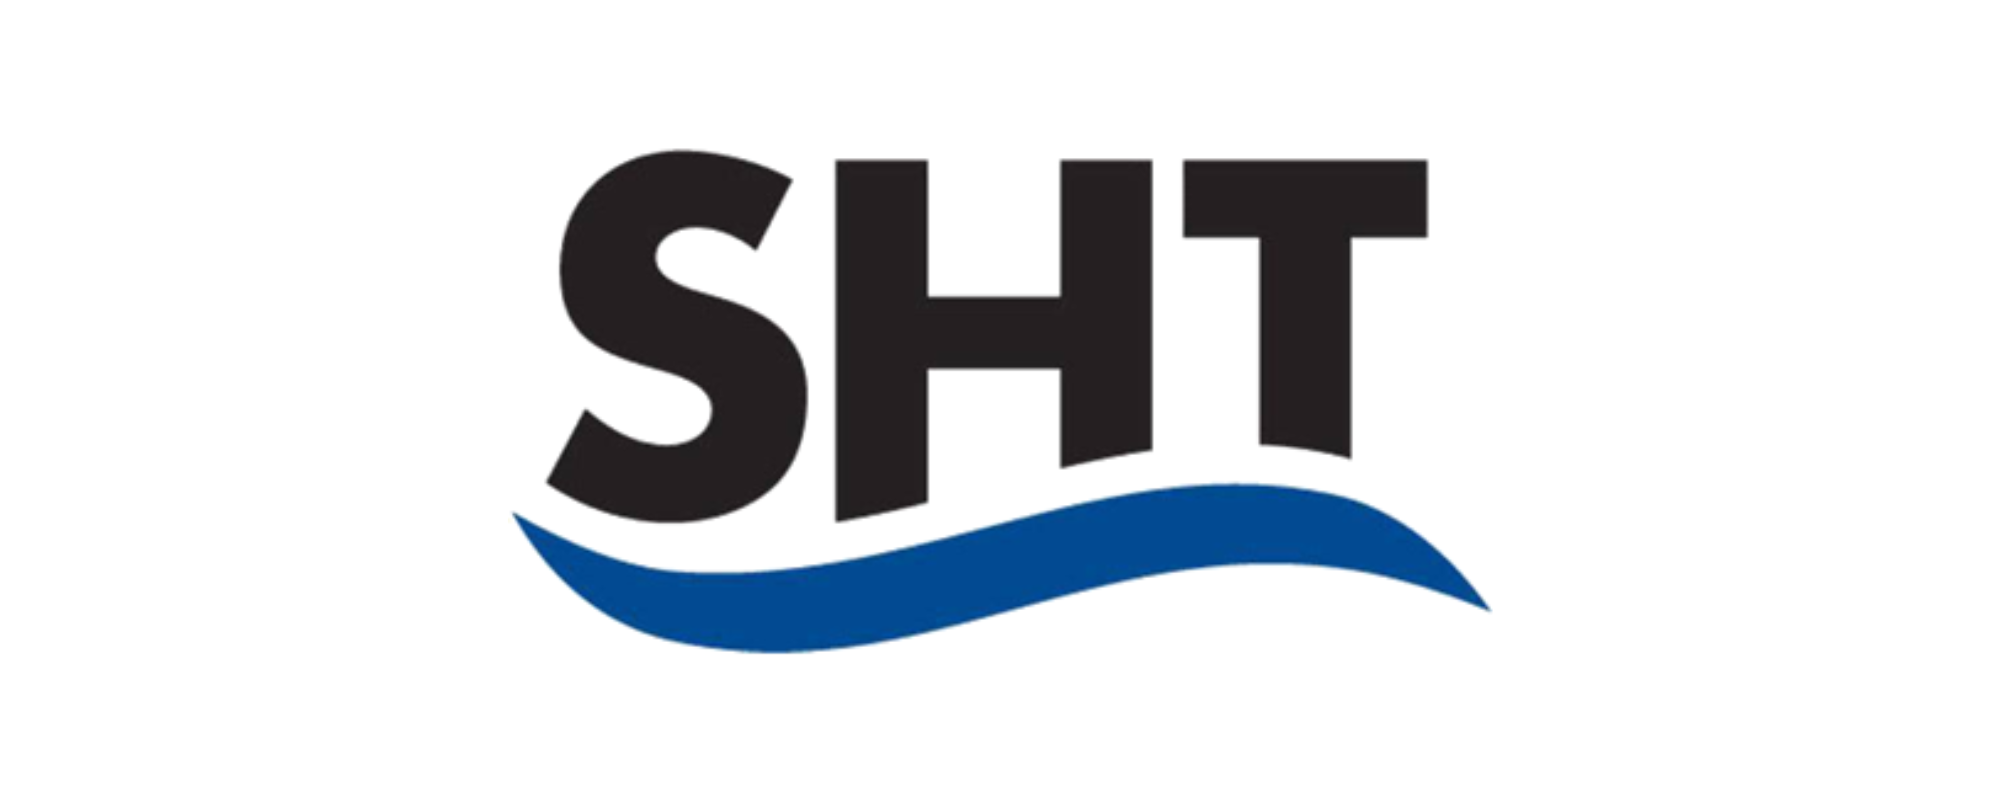 sht-logo